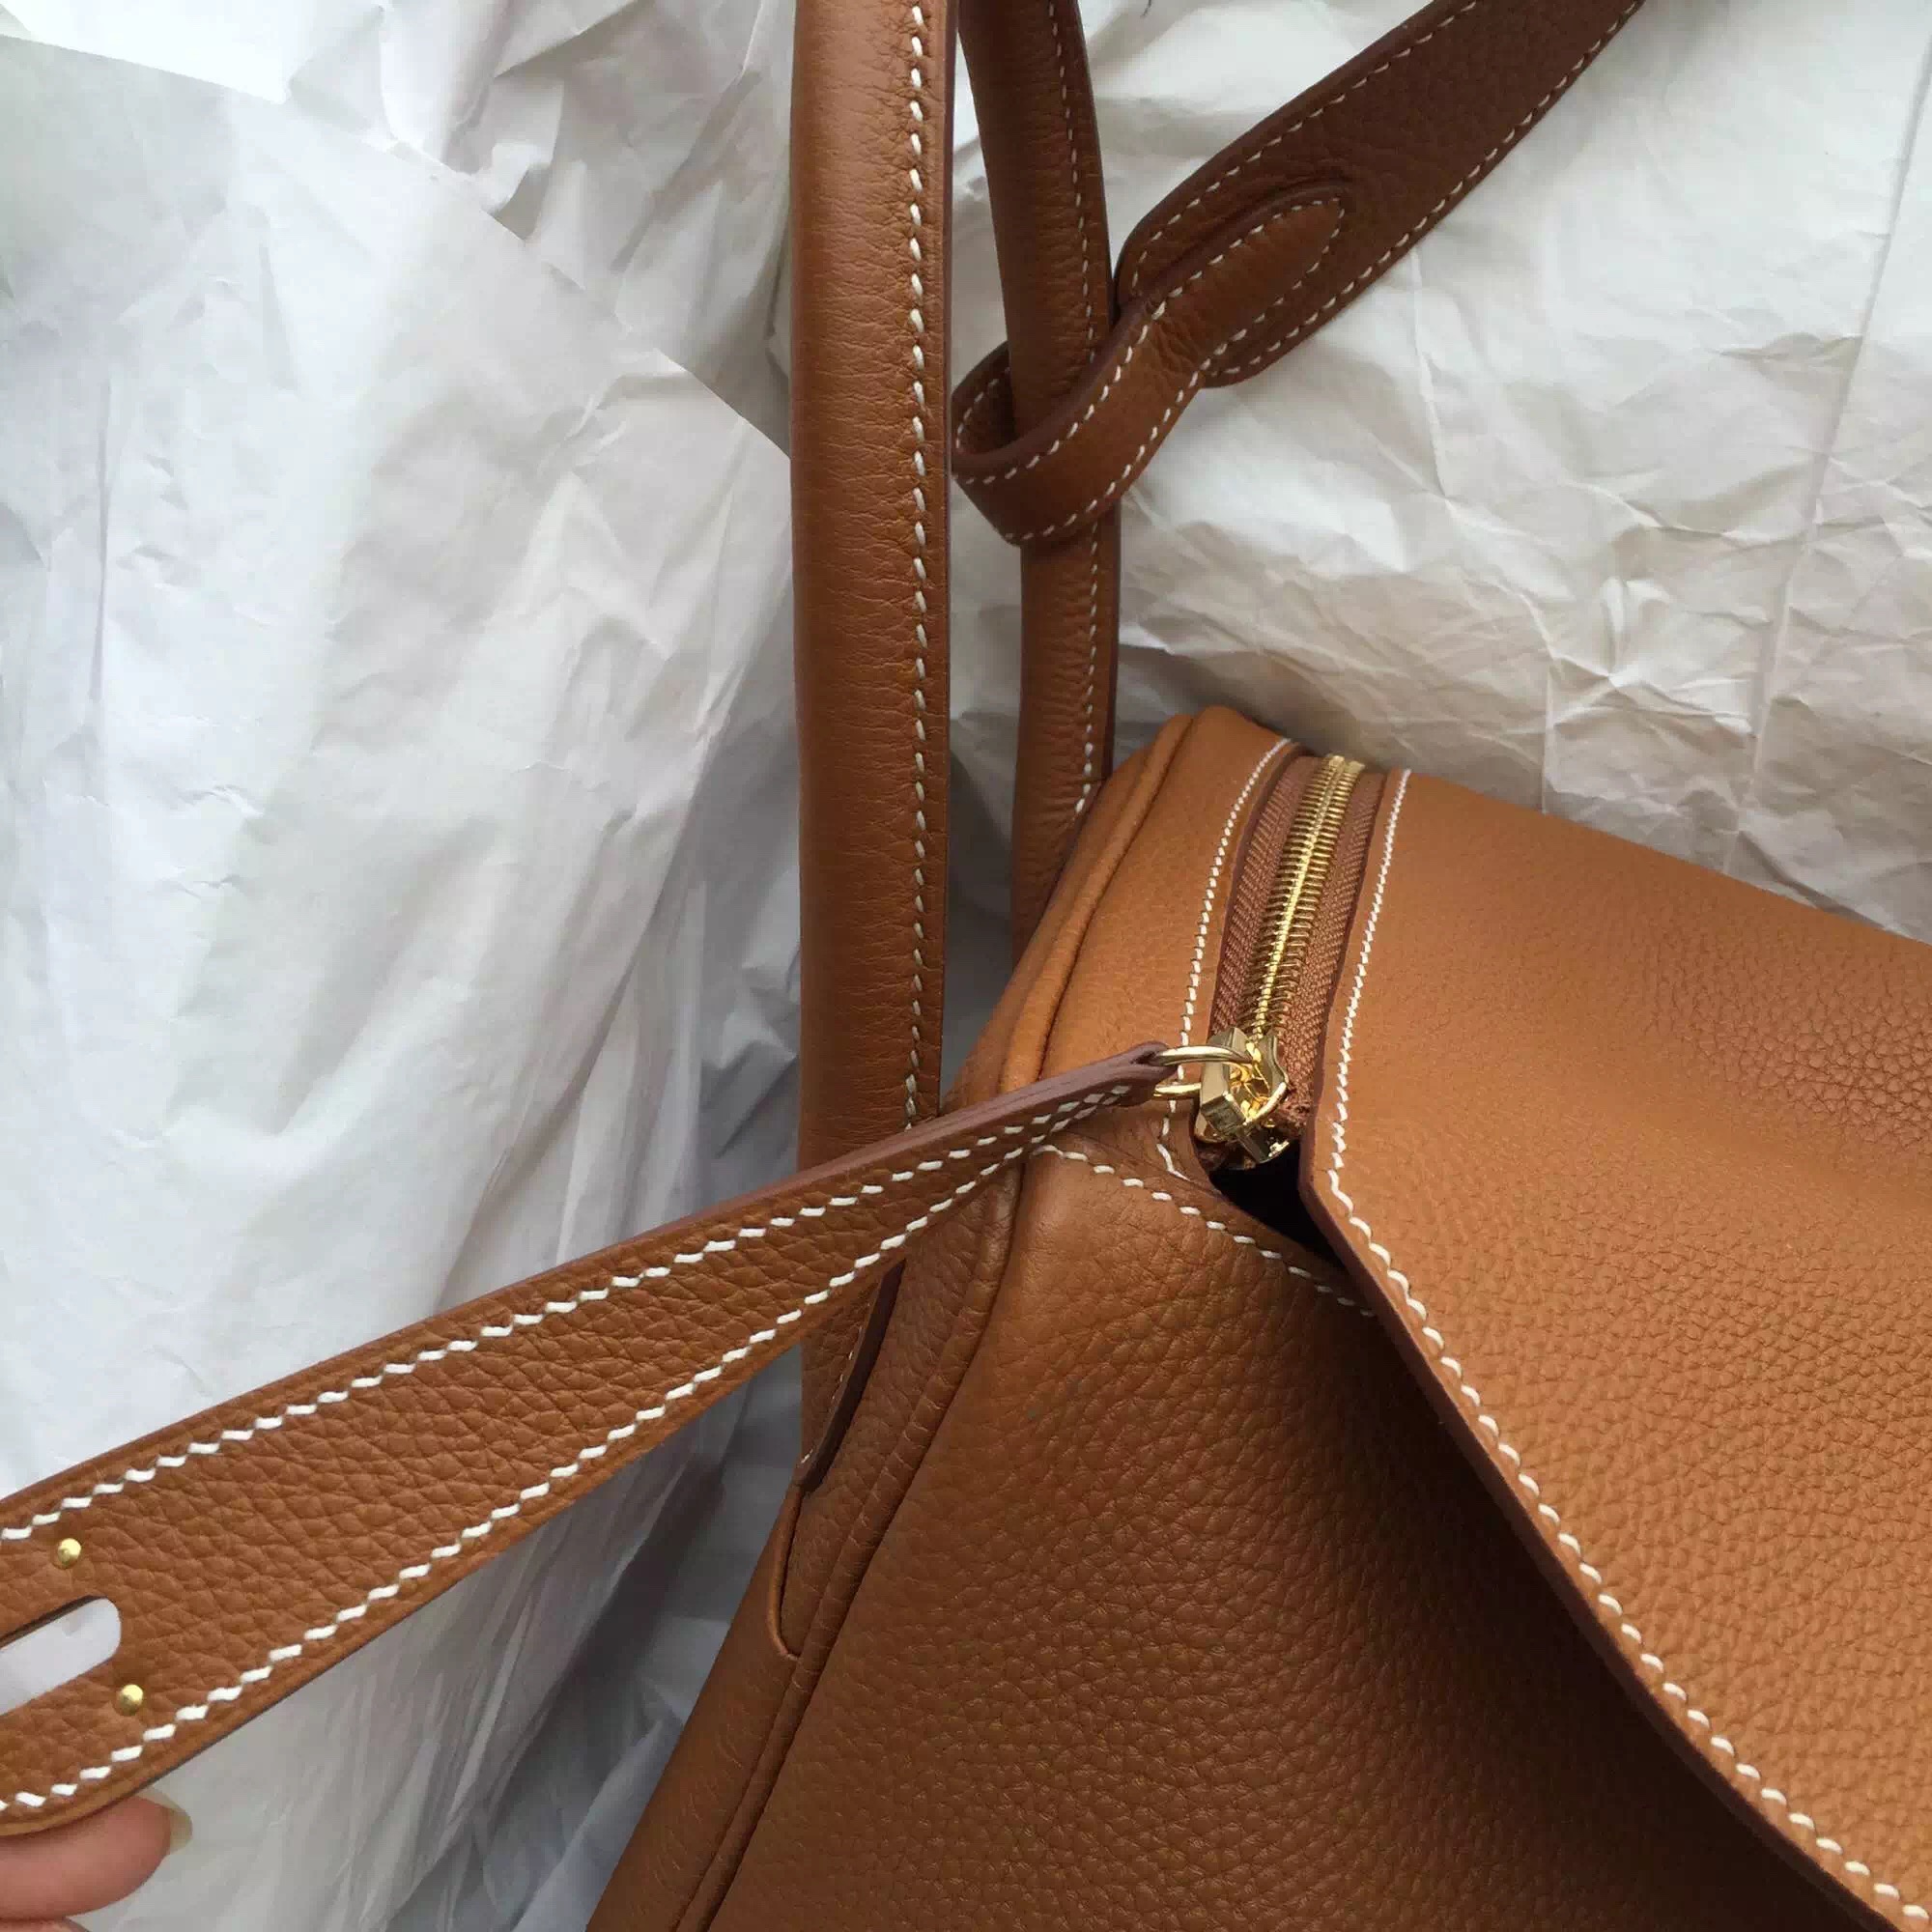 Hermes Lindy Bag 30cm C37 Light Coffee Togo Calf Leather Ladies&#8217; Handbag